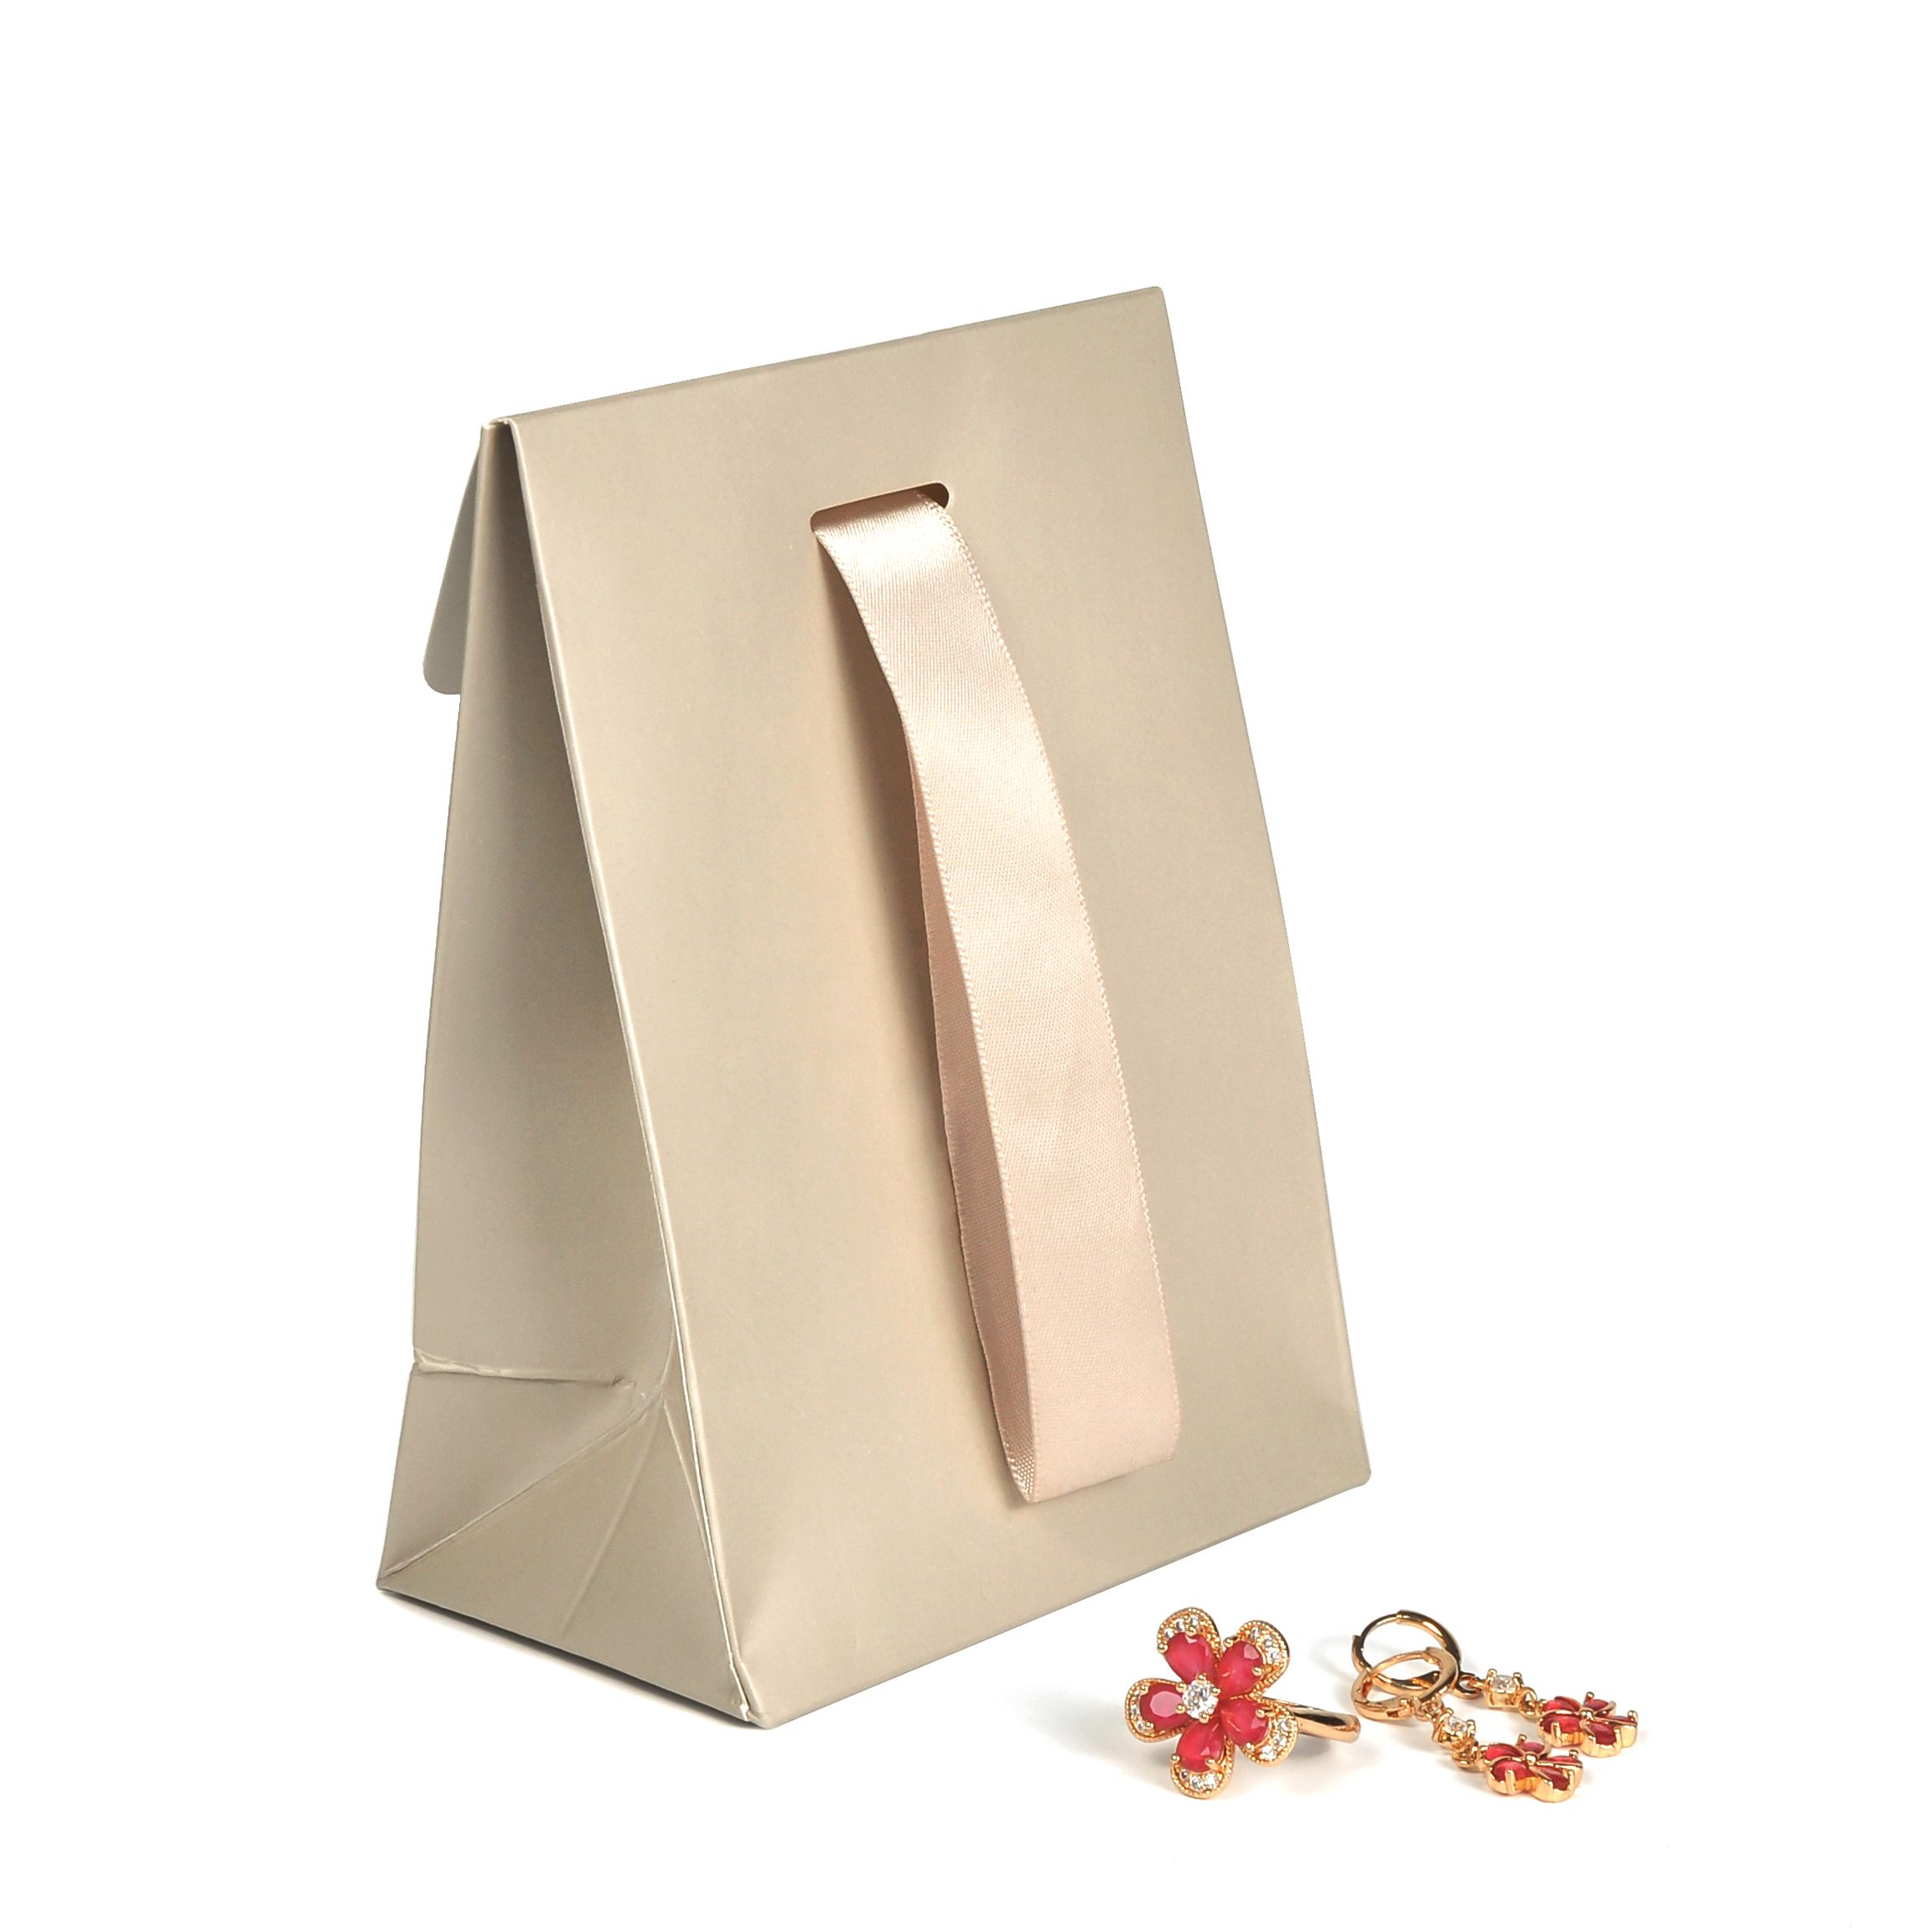 Yadao handmade CMYK printing paper bag gift packaging bag with custom logo and ribbon clousure